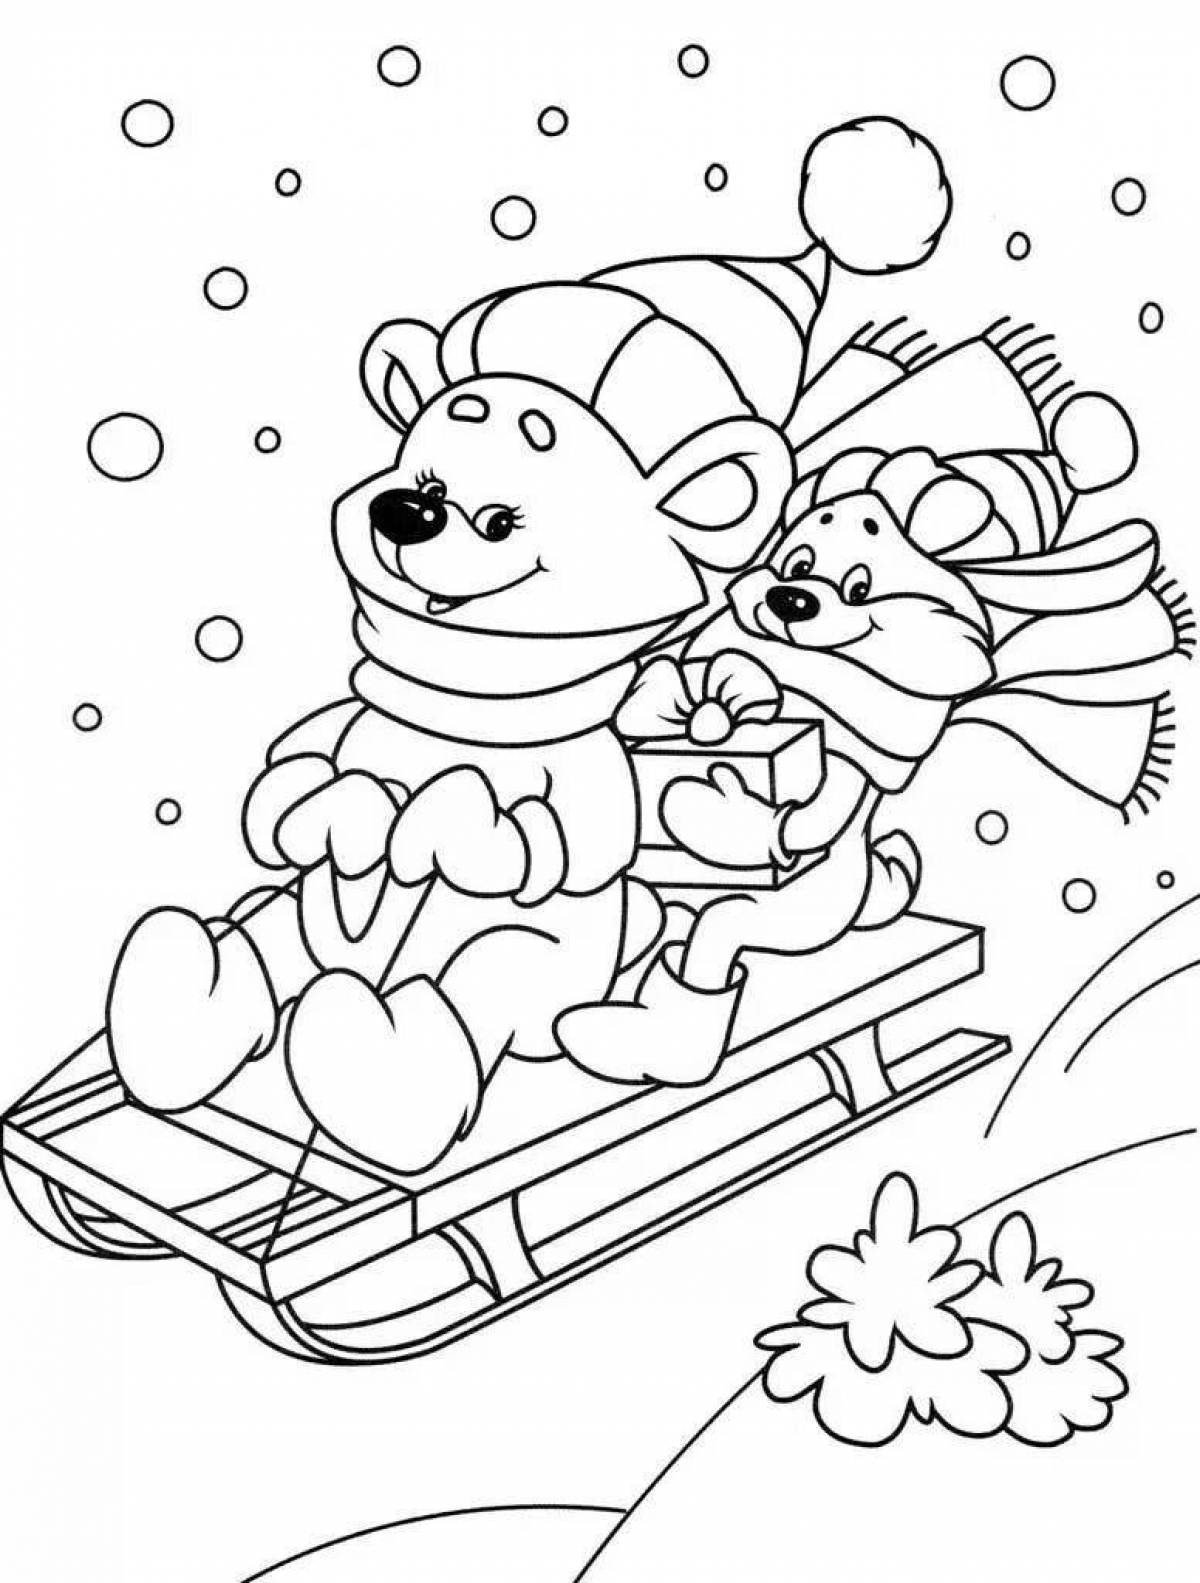 Magic winter coloring book for preschoolers